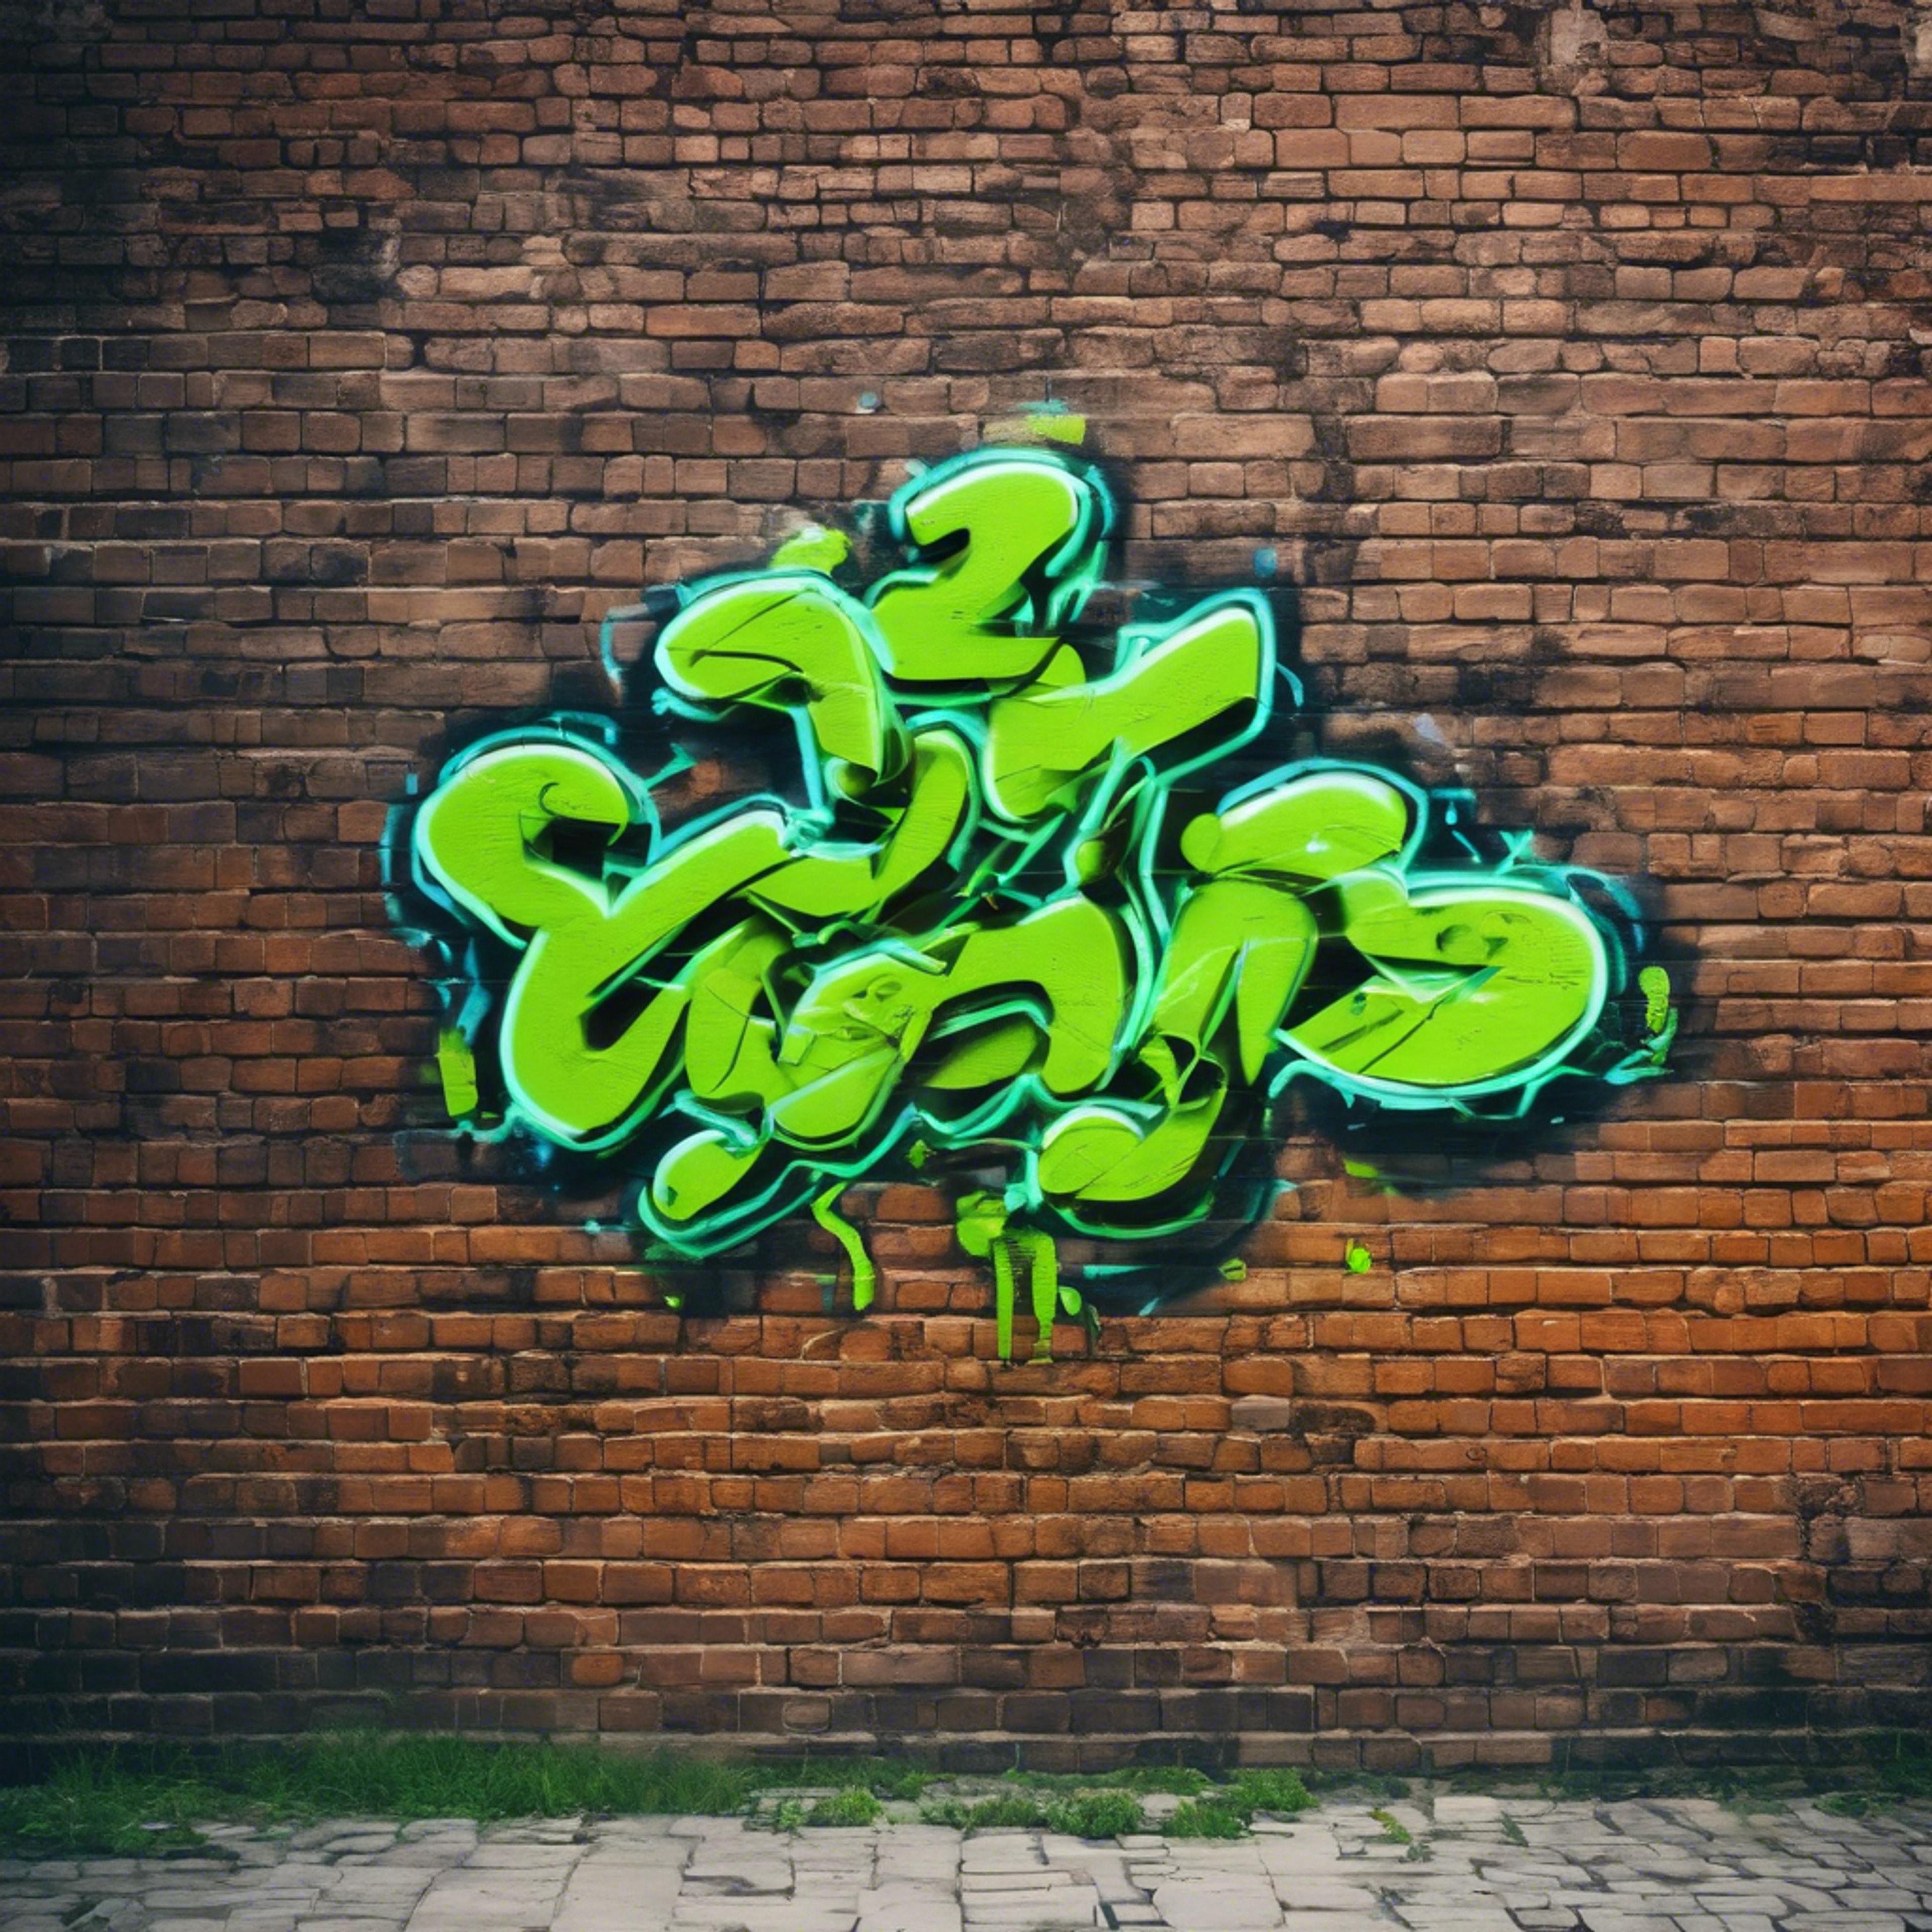 Cool neon green graffiti on an old brick wall in an urban setting. Divar kağızı[8032604dbabf4a1691c6]